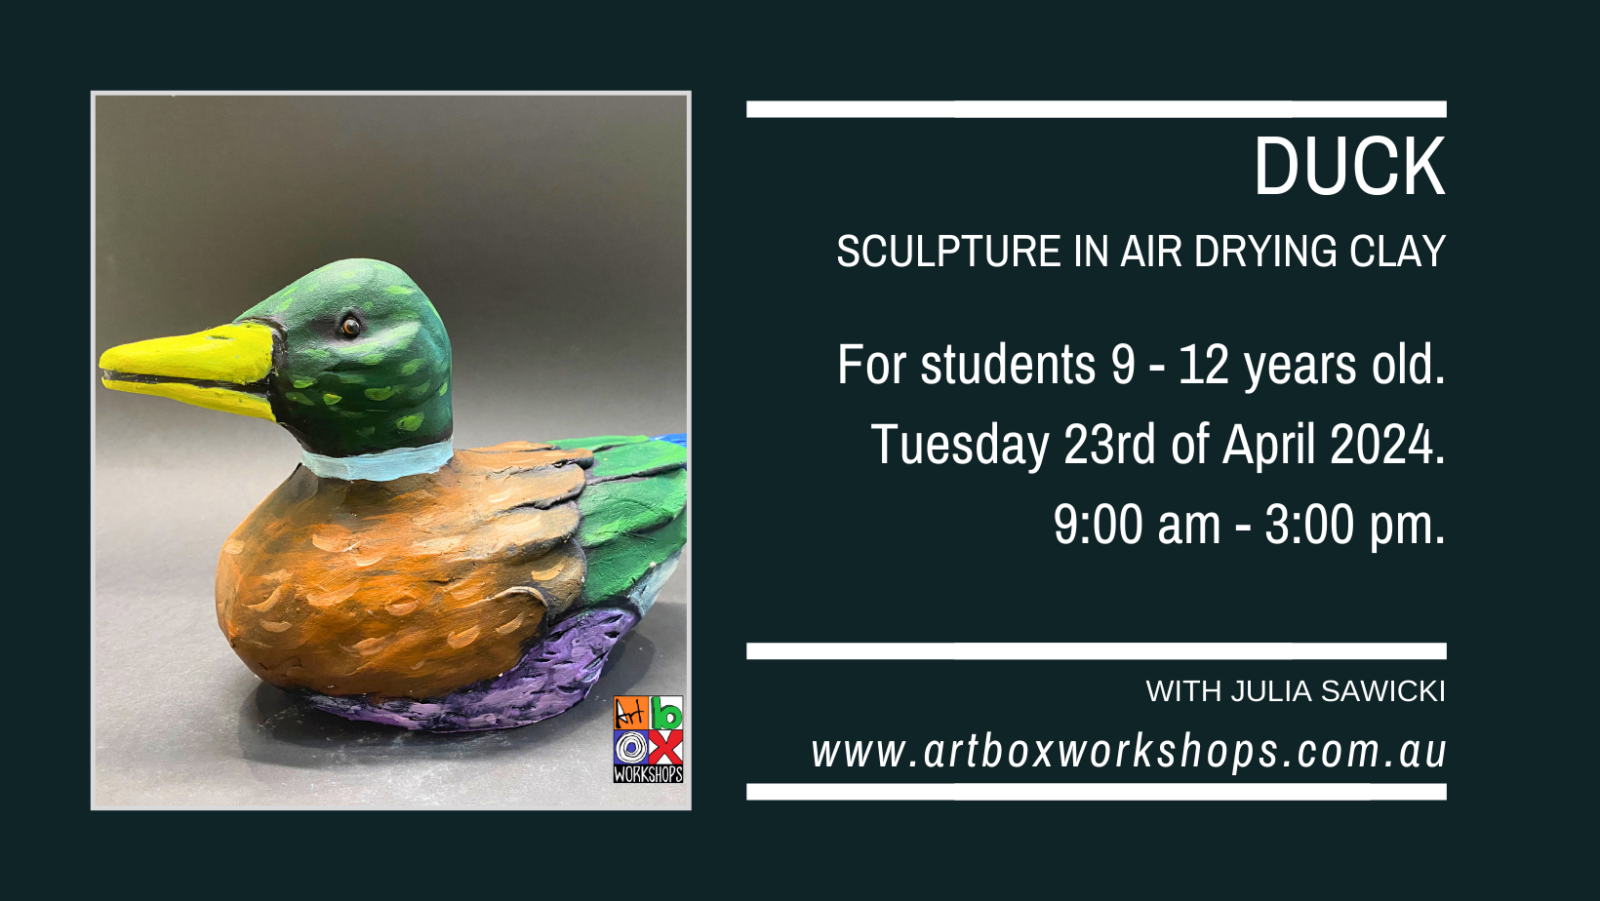 Duck sculpture at Art Box Workshops